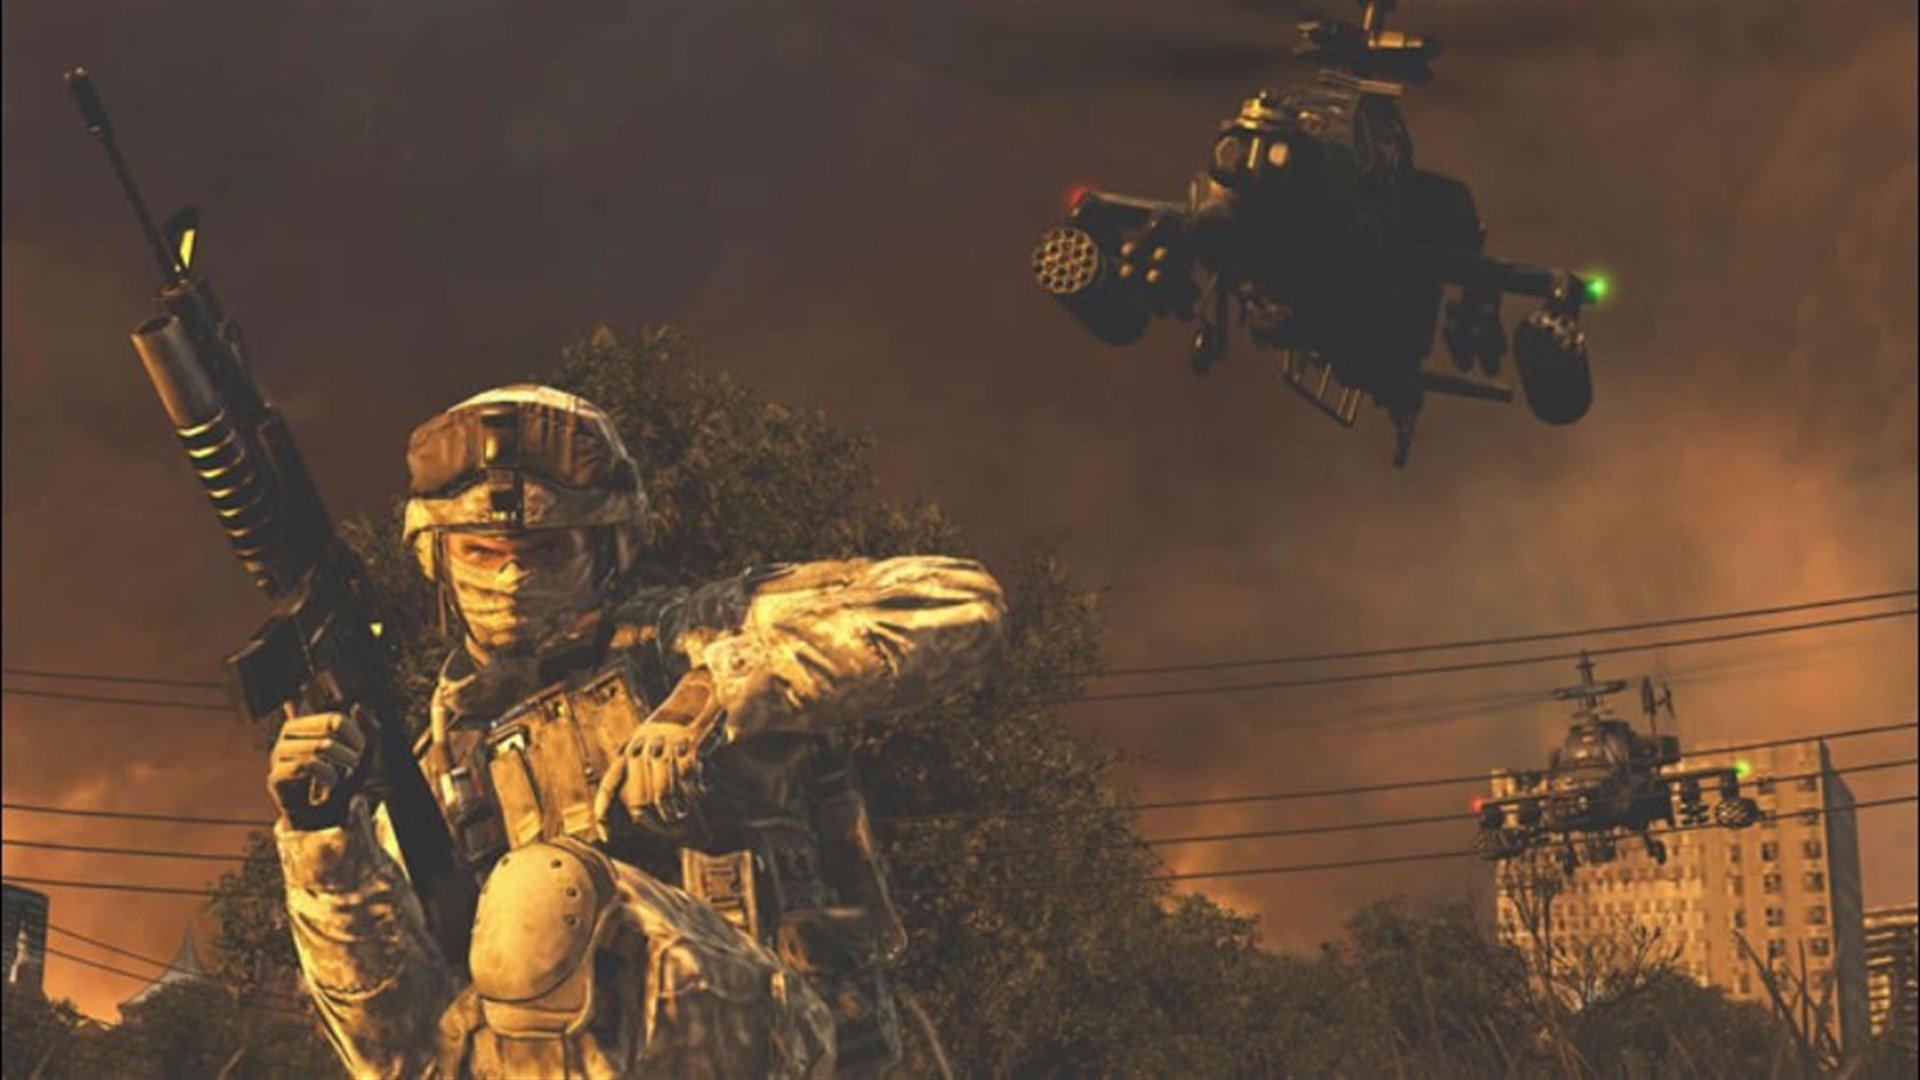 Call of Duty Modern Warfare 2 CoD MW2 2009 Microsoft Xbox 360 SQUARE ENIX